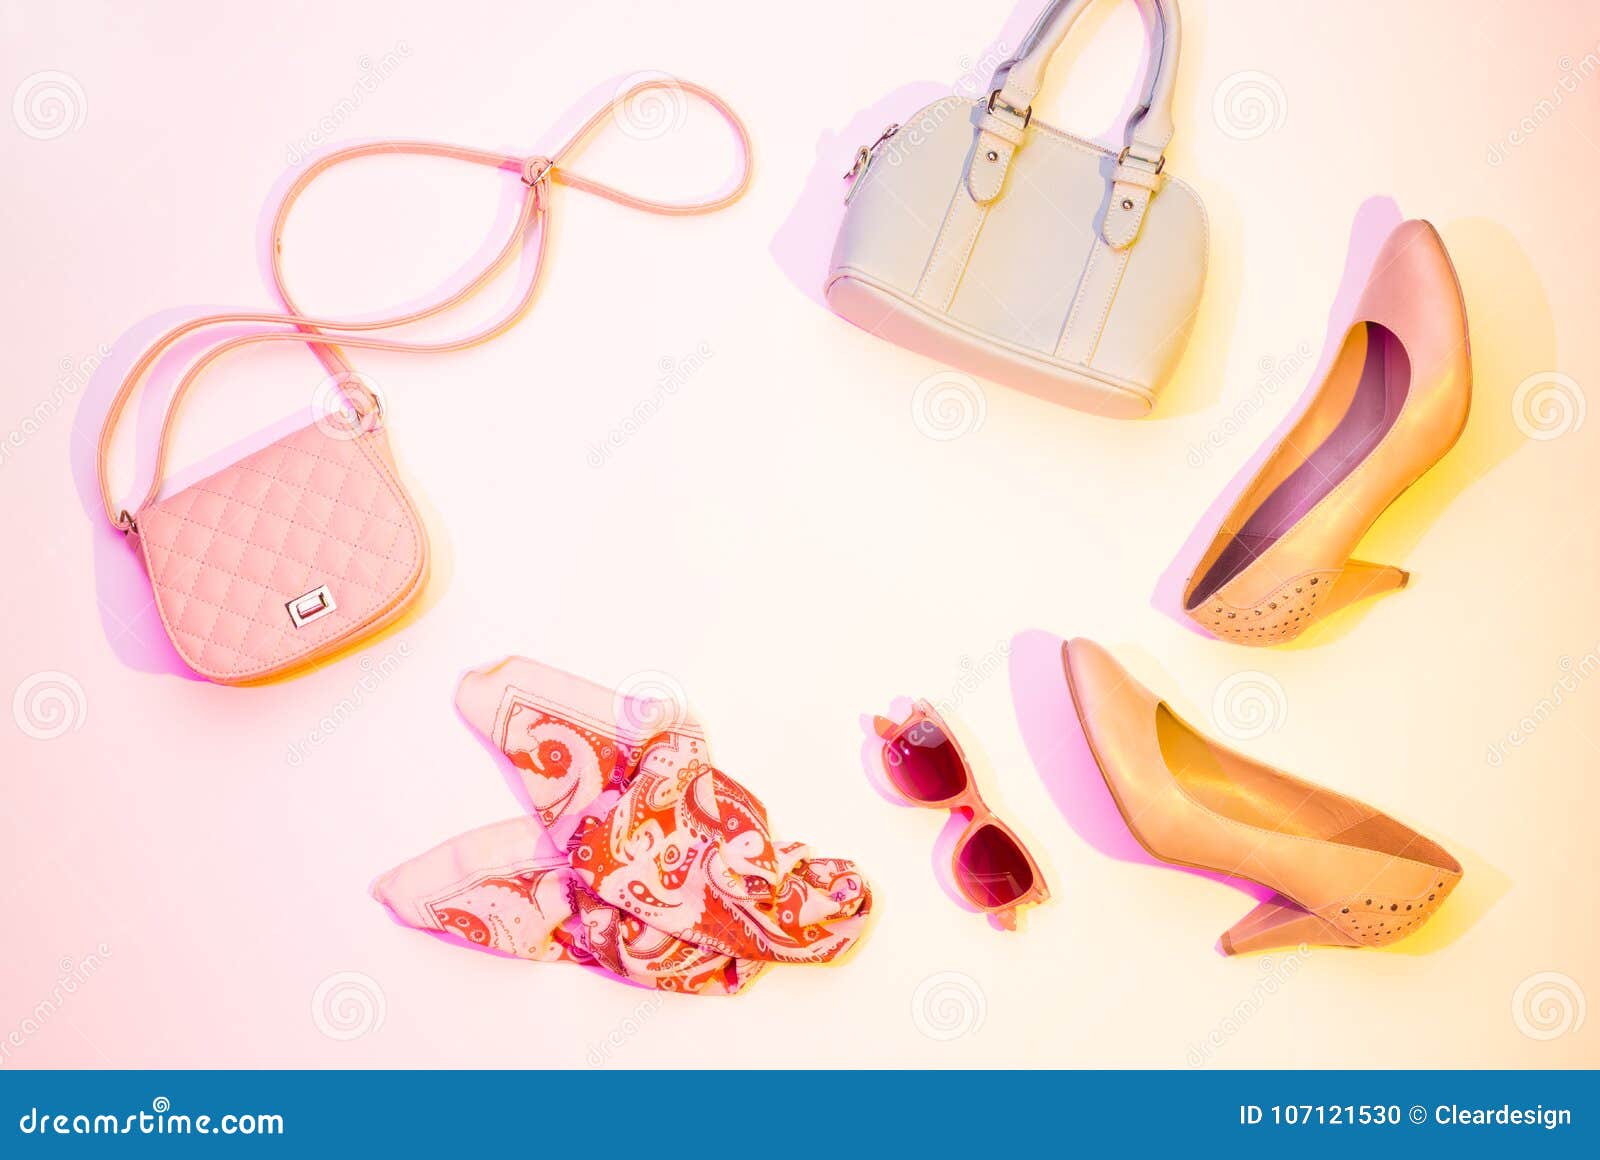 High Heels, Handbag and Scarf - Fashion Accessories Stock Photo - Image ...